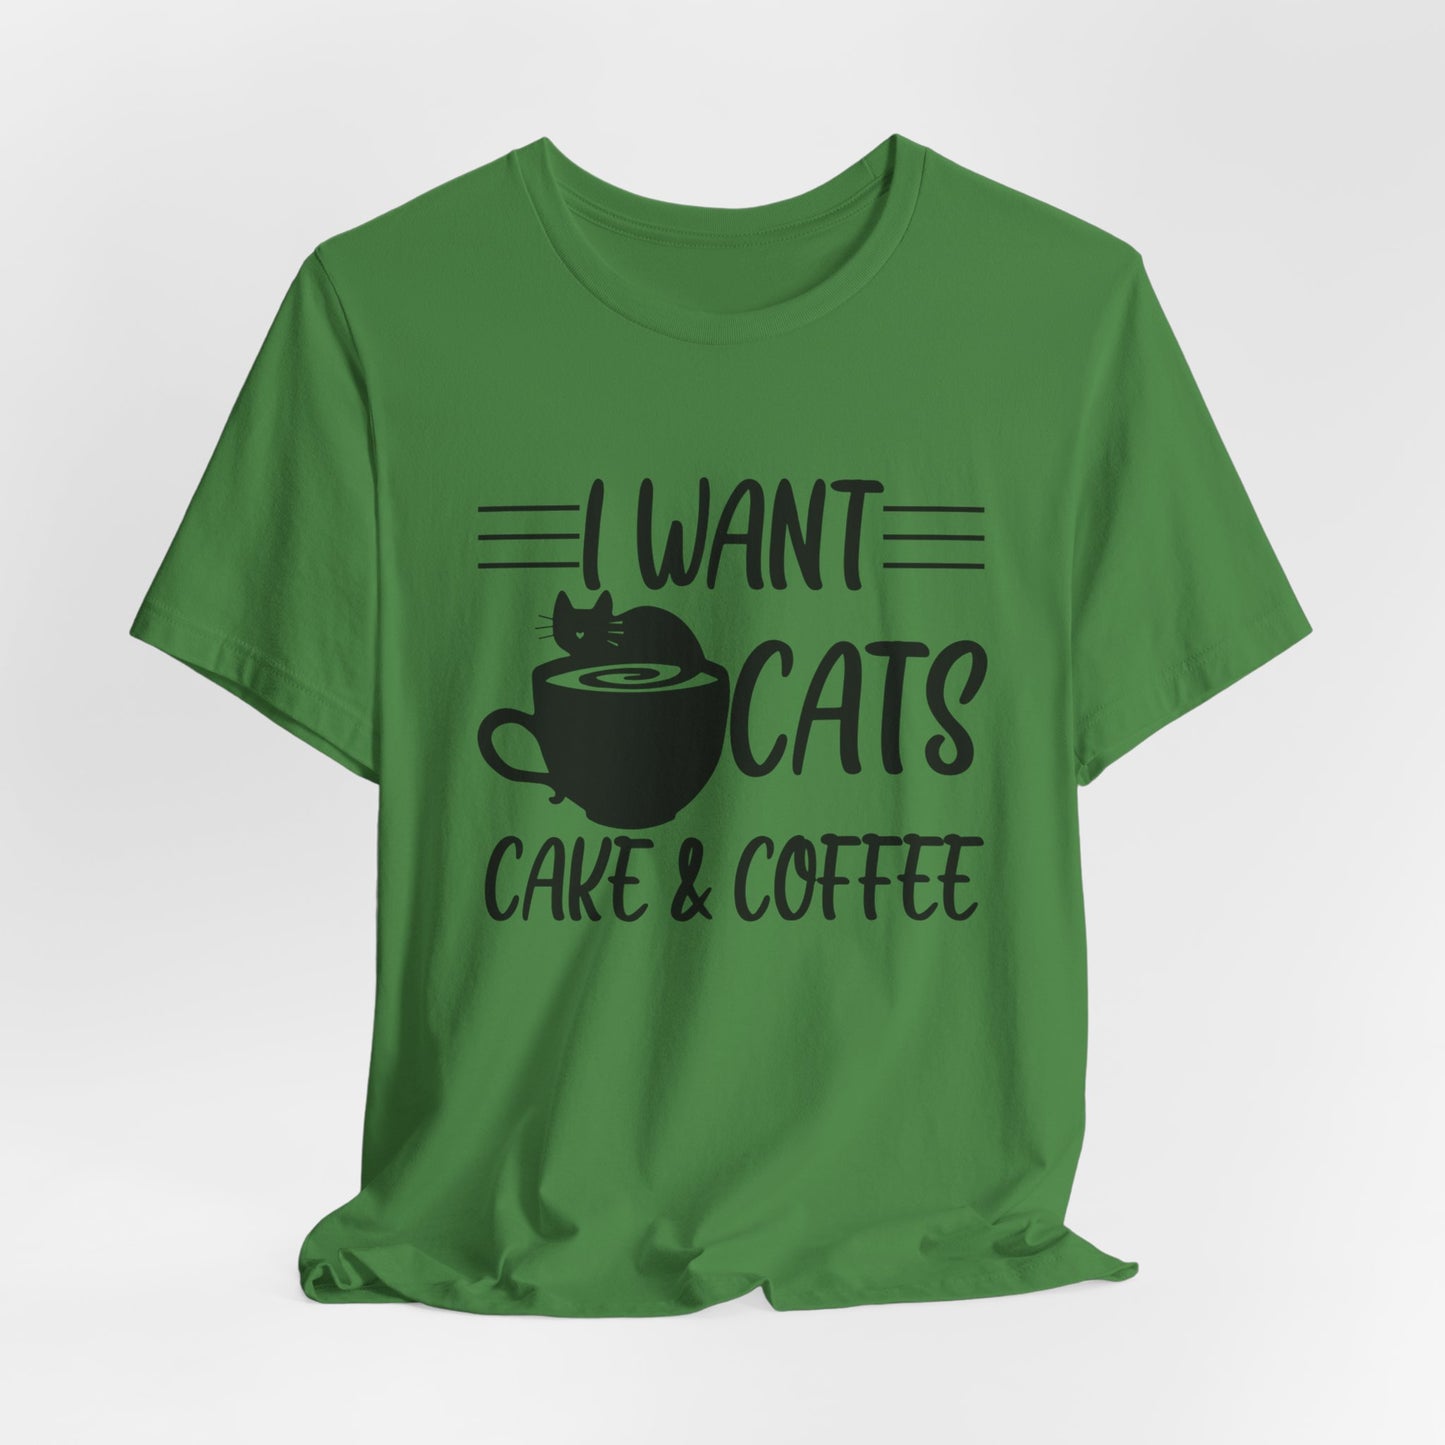 Cats Cake & Coffee T-Shirt